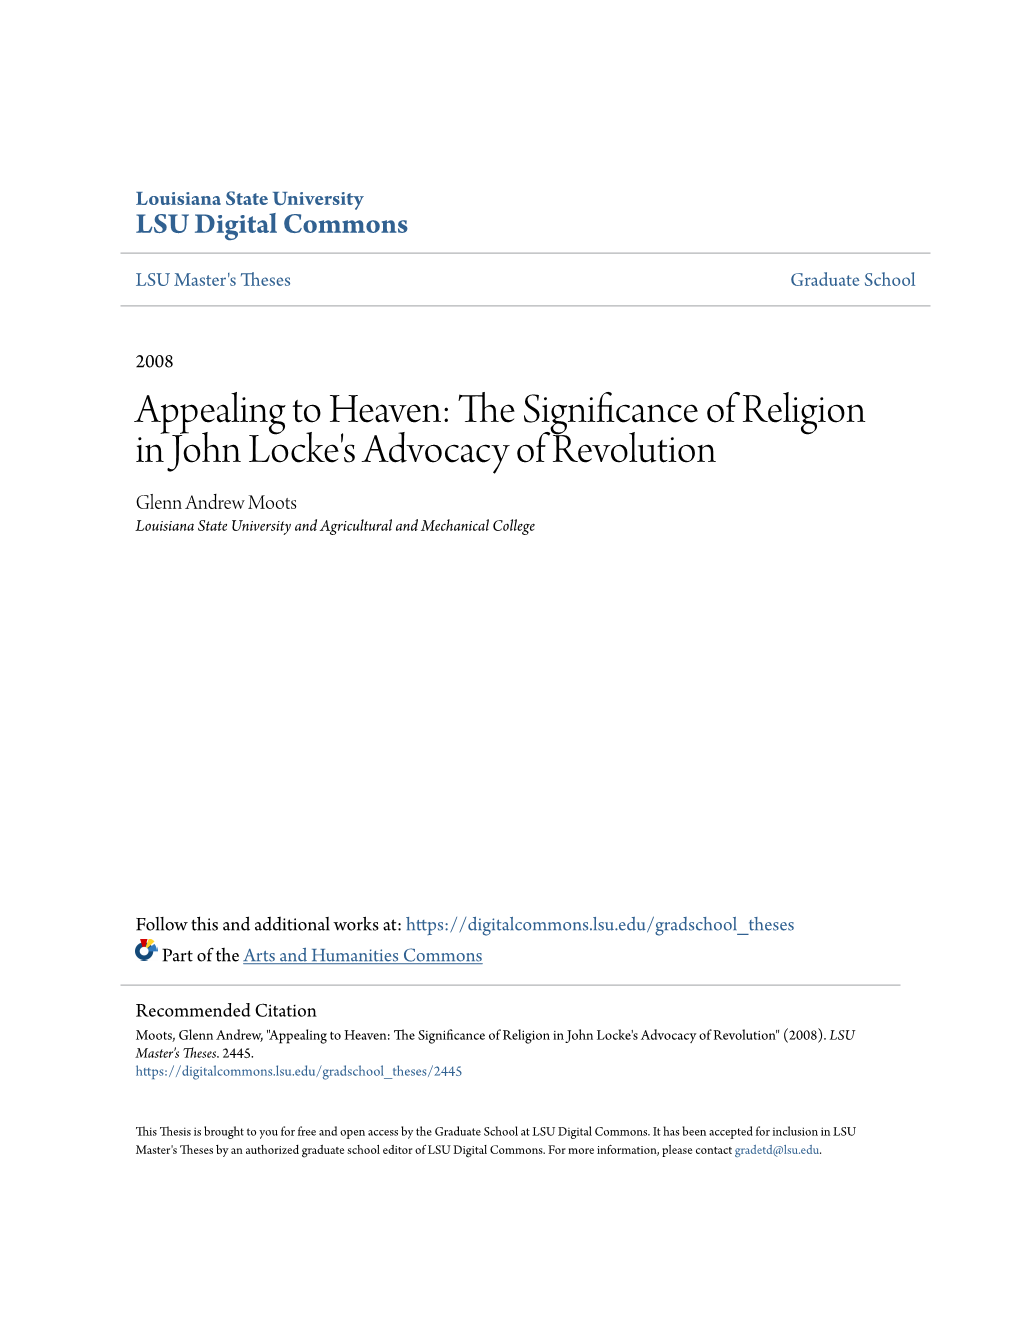 The Significance of Religion in John Locke's Advocacy of Revolution